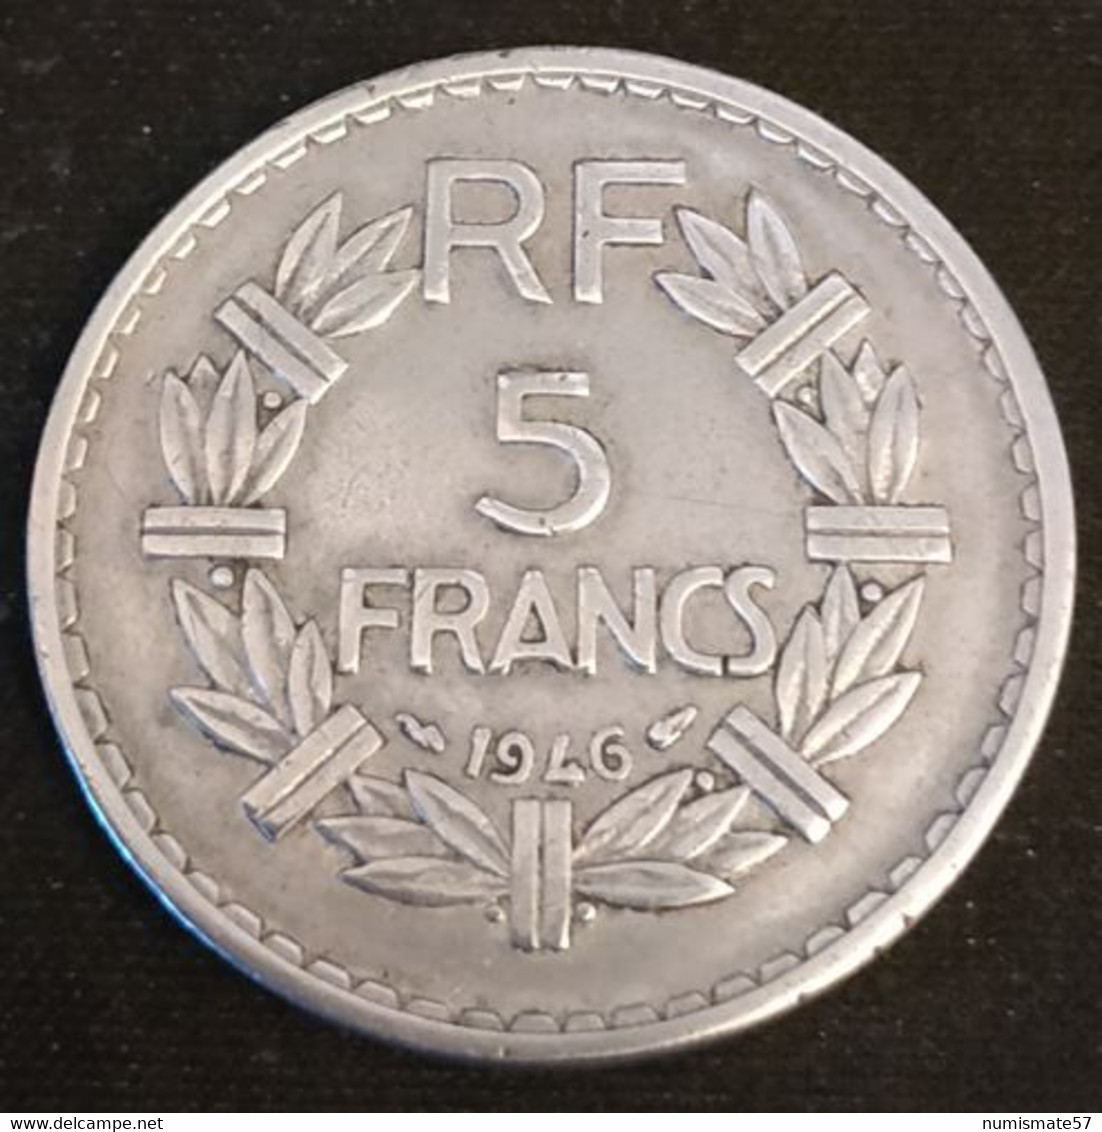 FRANCE - 5 FRANCS 1946 - Lavrillier - Aluminium - Gad 766 - KM 888b.1 - 5 Francs